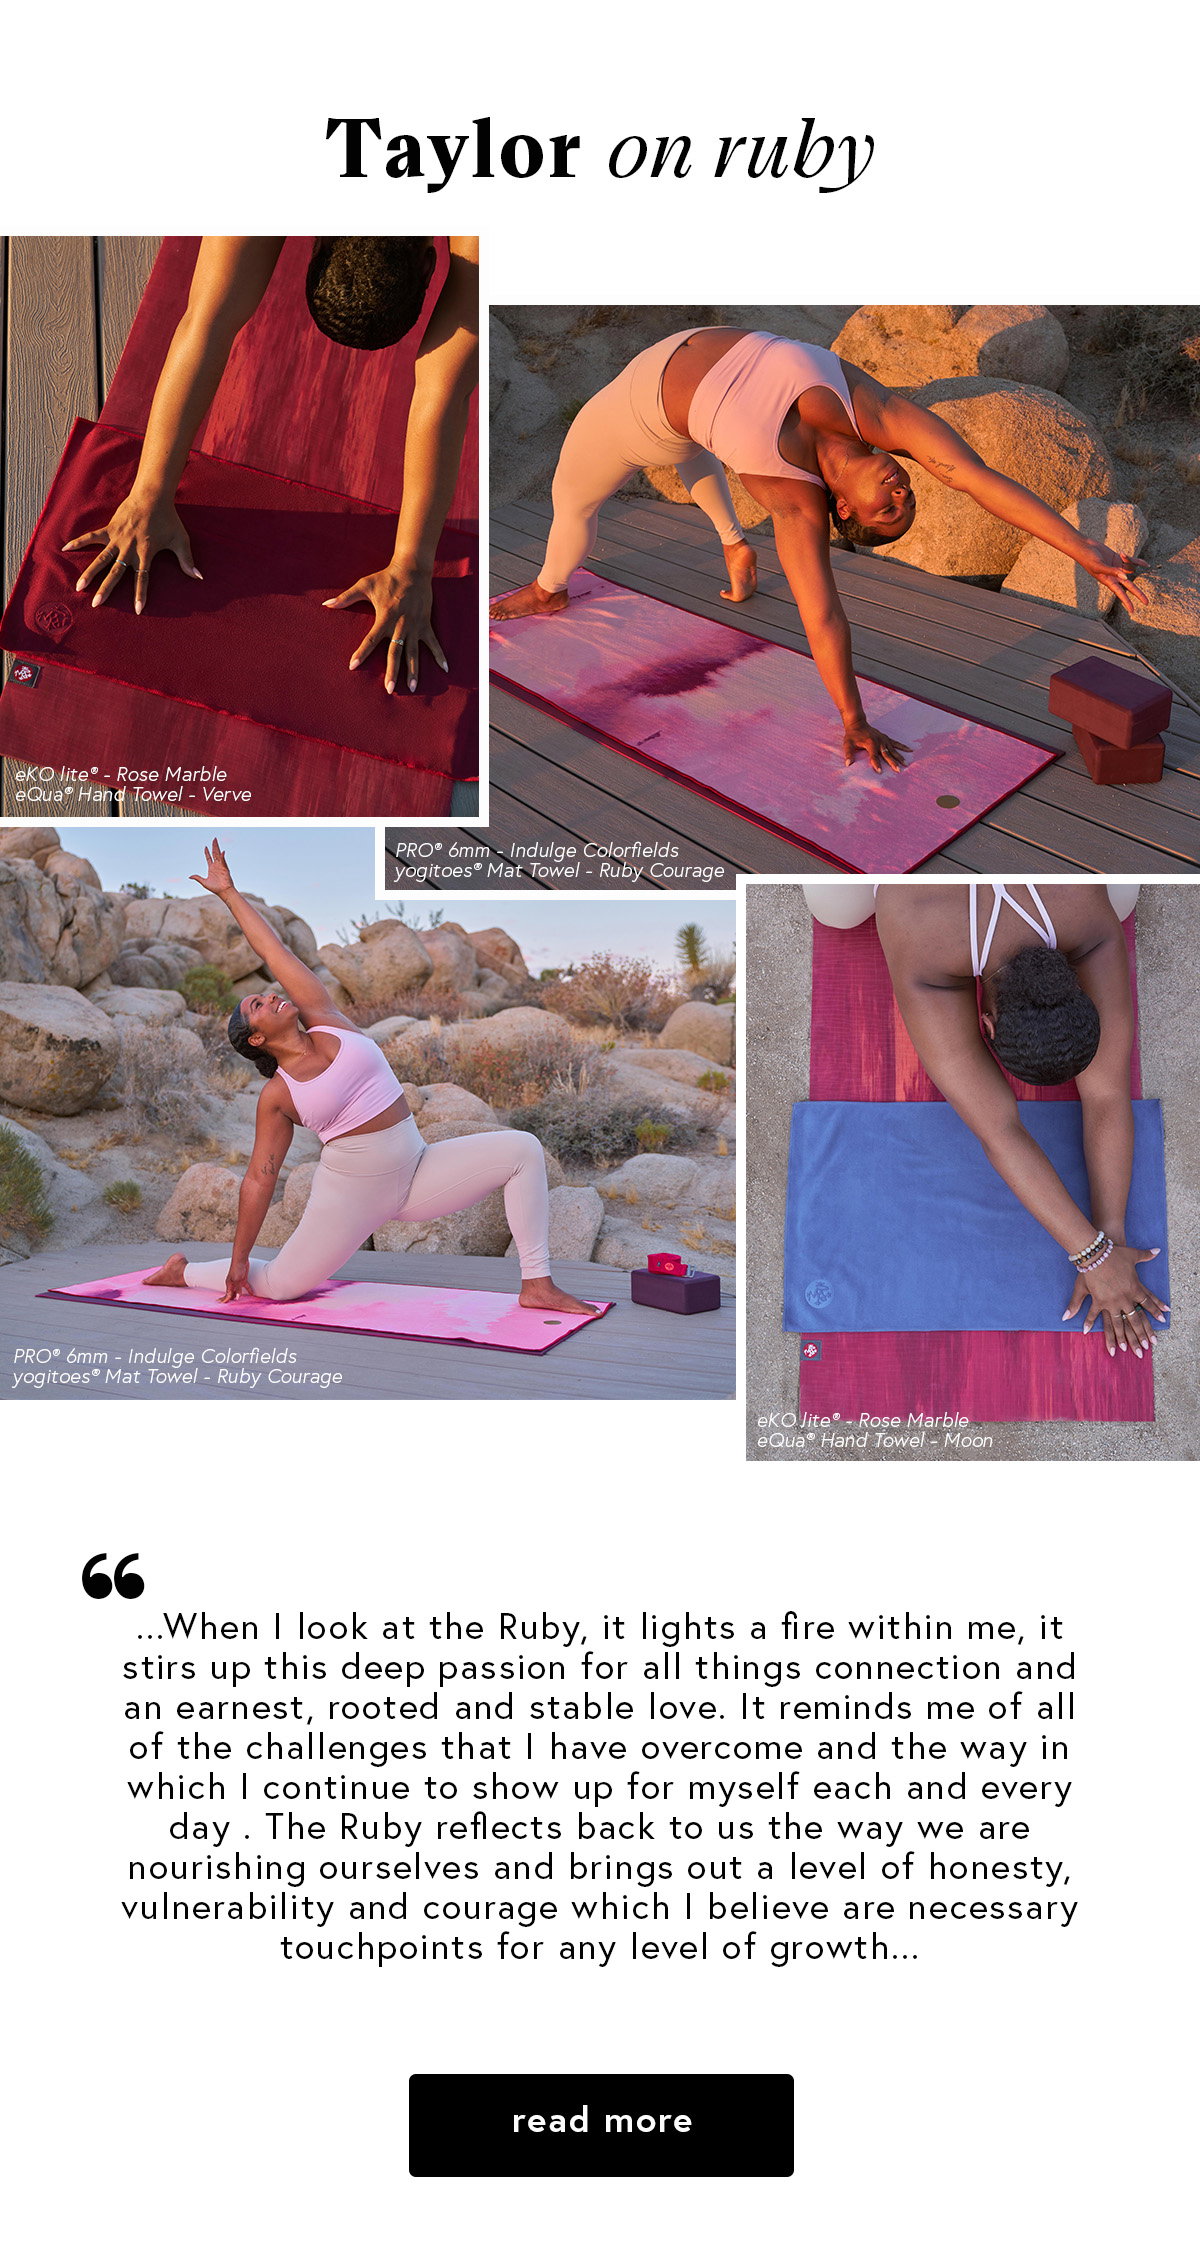 Manduka PRO Yoga Mat, eQua Yoga Towel and Carrying Strap Set - l&l life